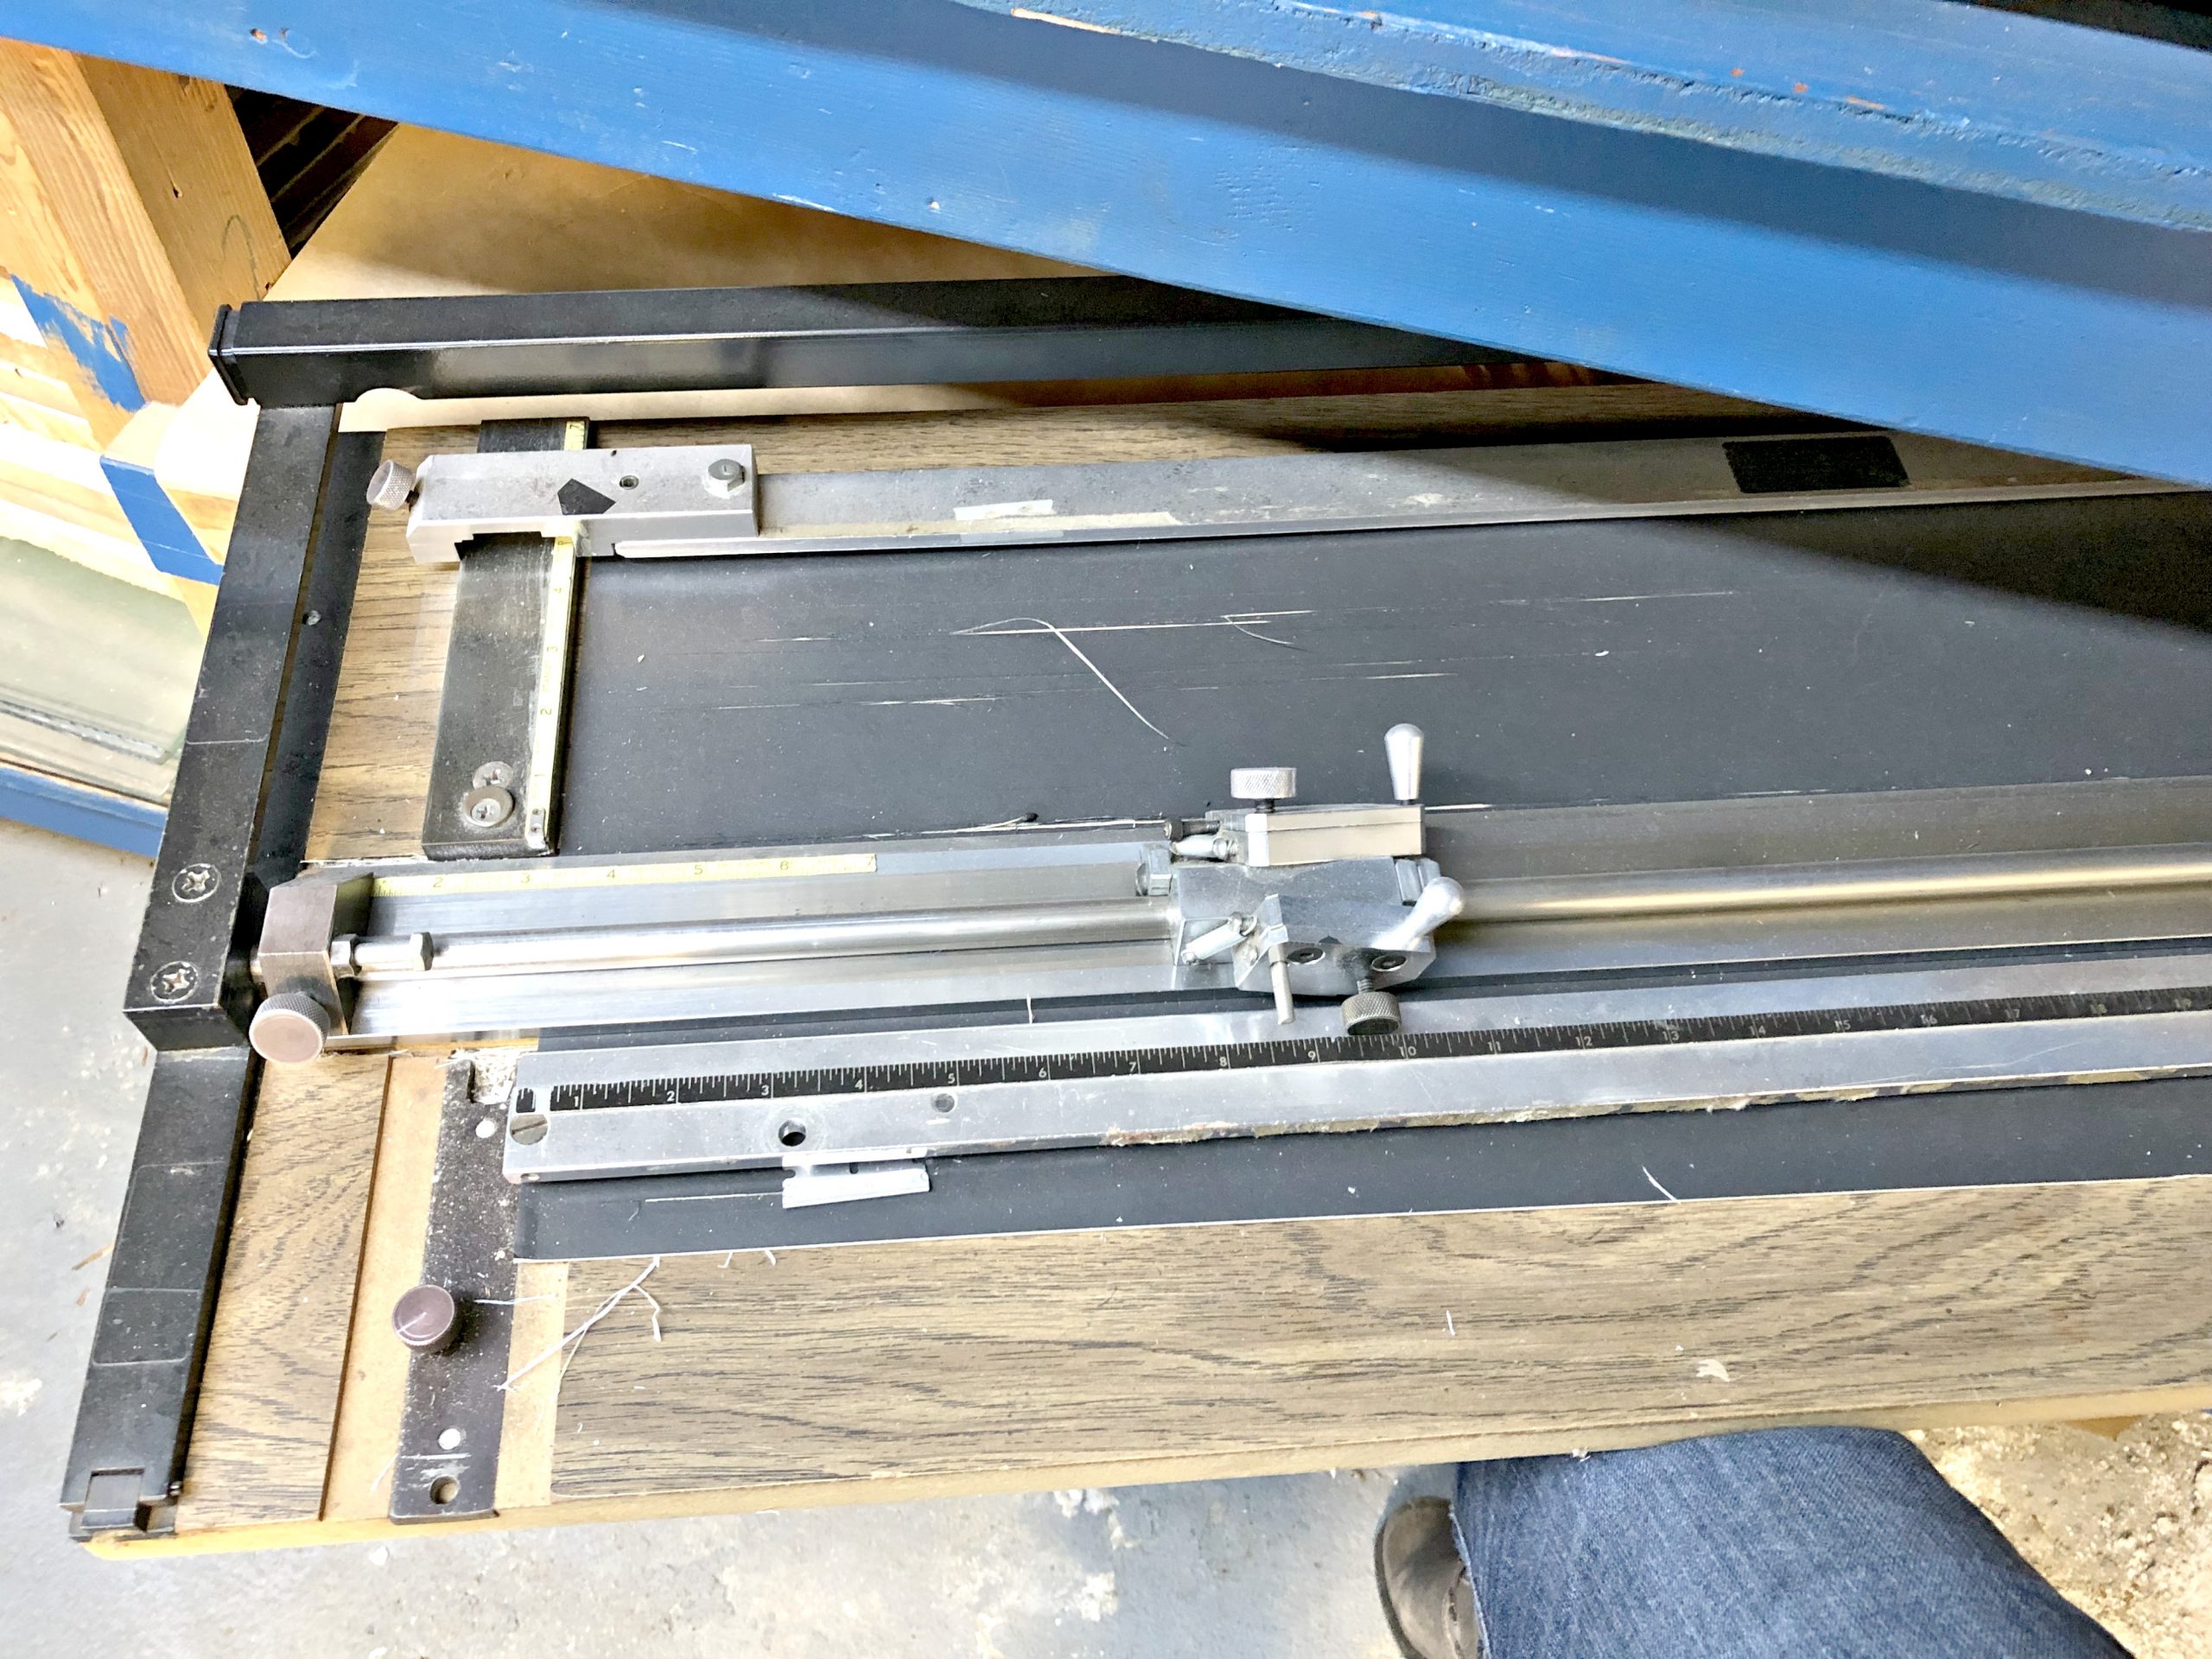 Print Mount Vacuum Heat Press PM/44 (used) Item # UFE-M1800 (MA)